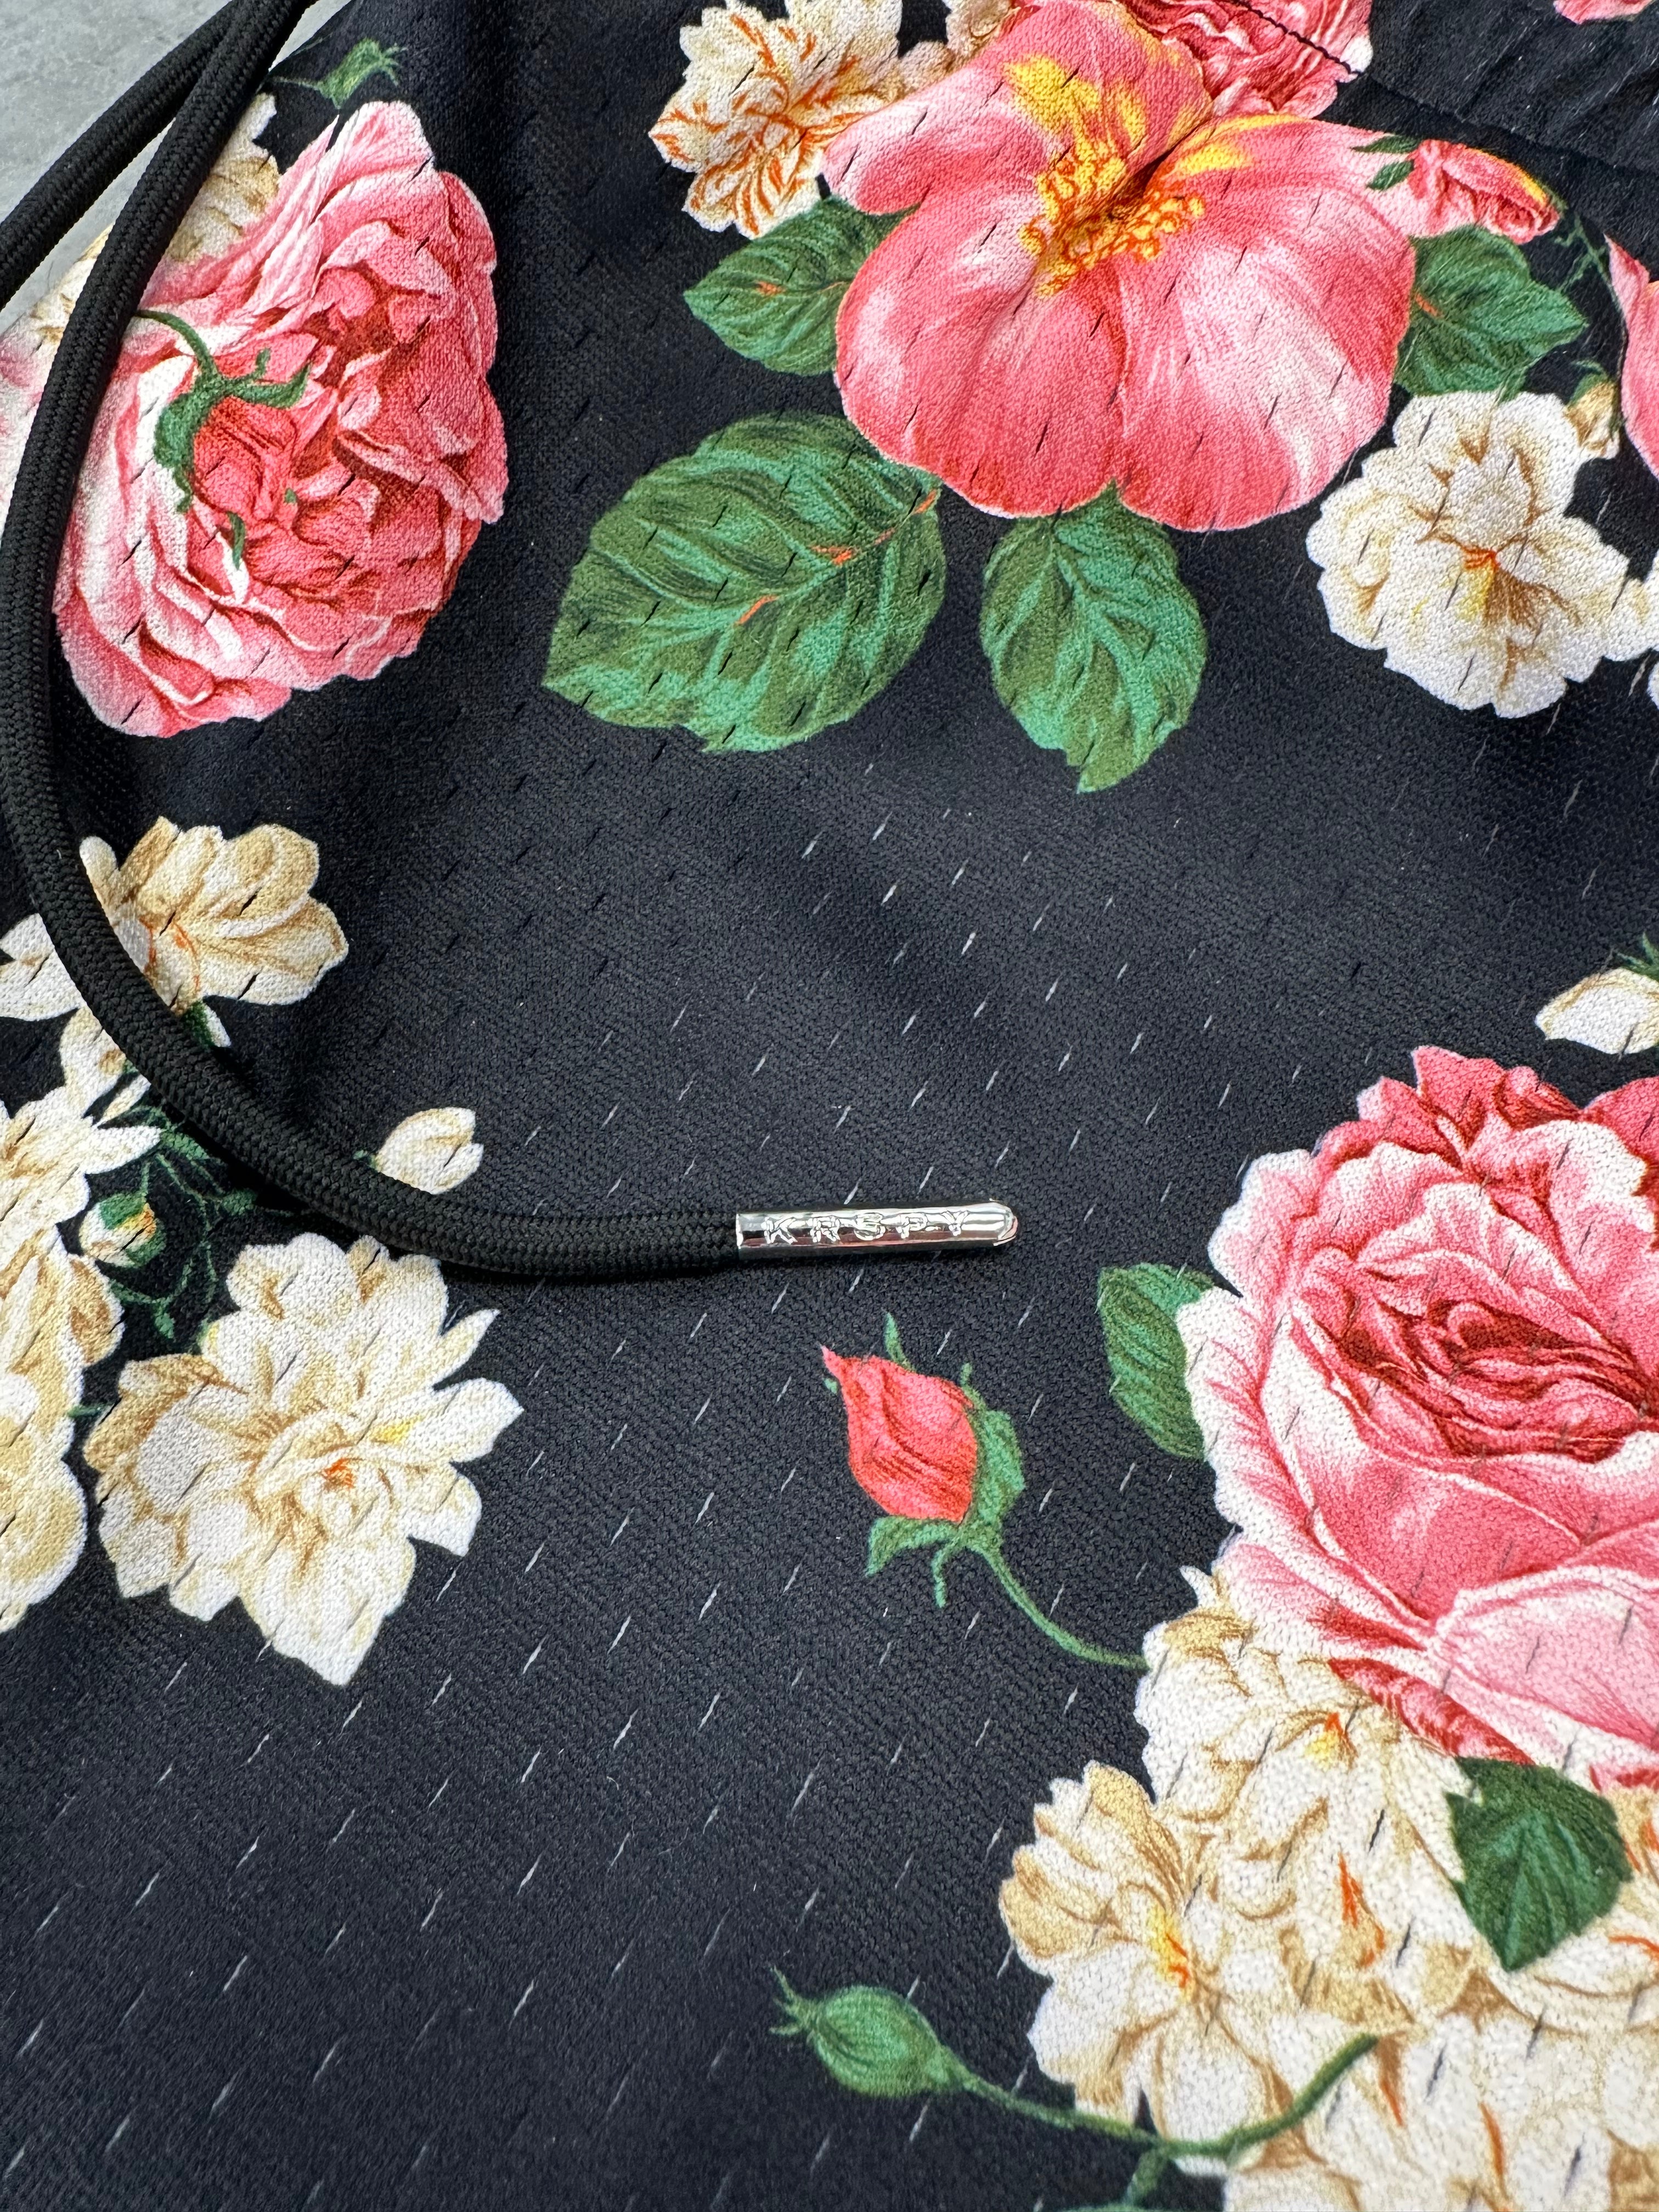 Floral Lifestyle Shorts - Black